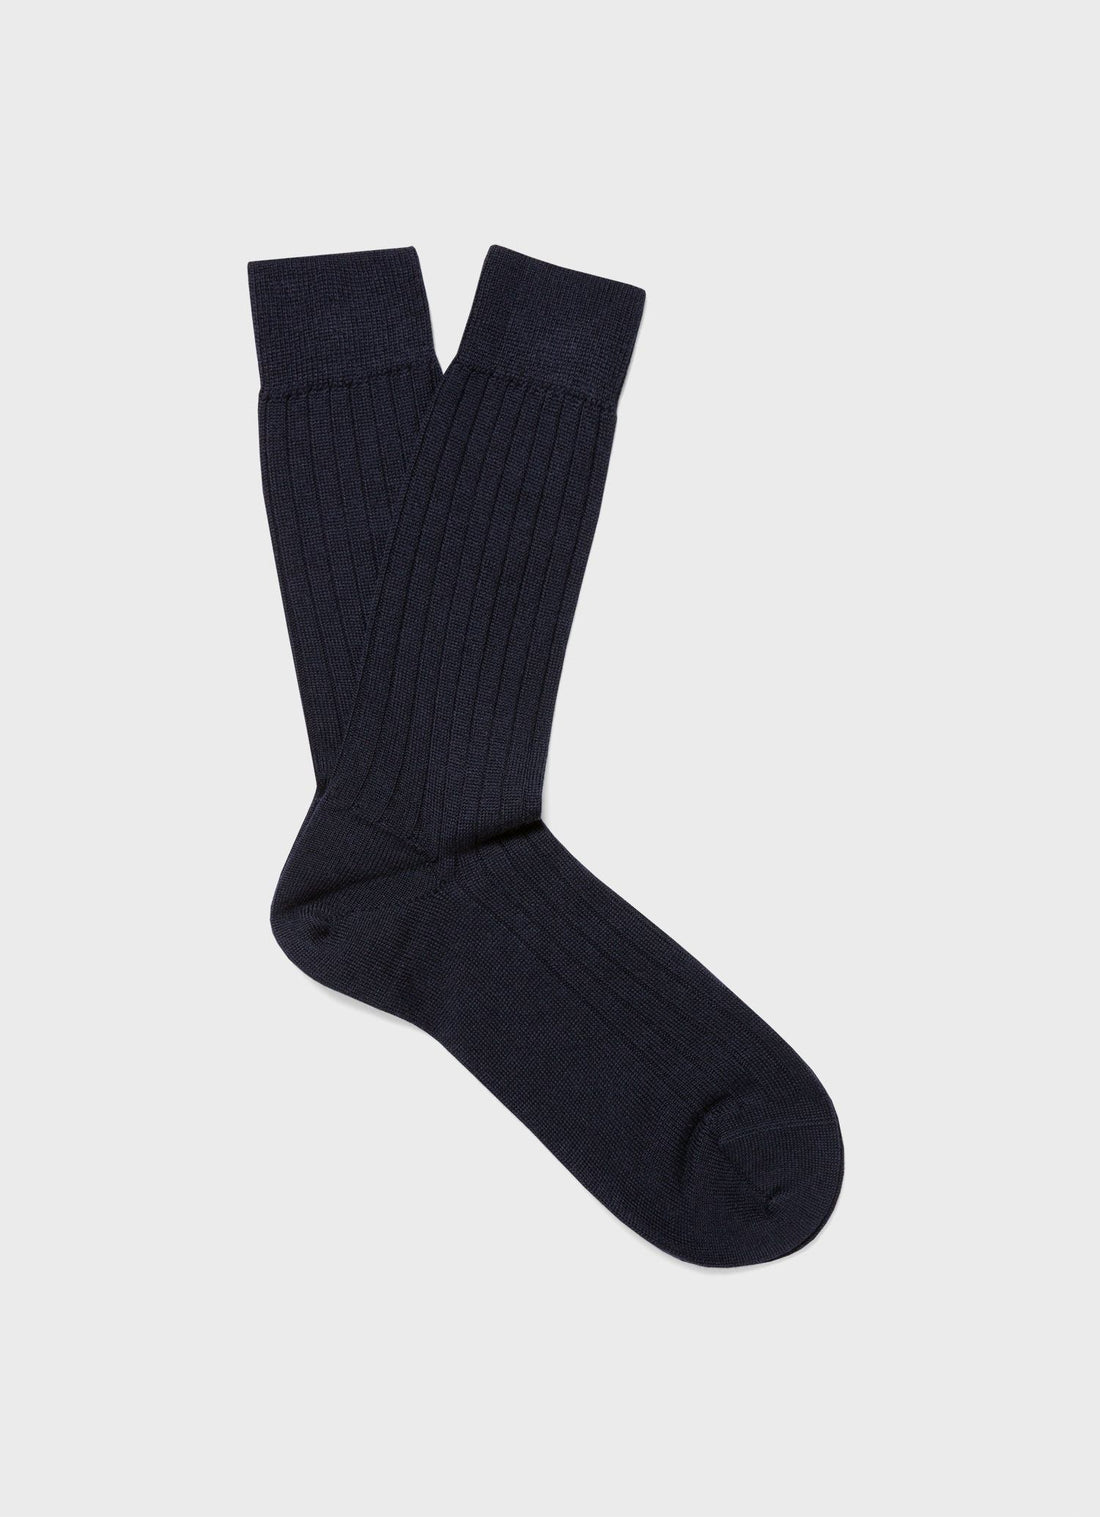 Men's Merino Wool Rib Socks in Navy